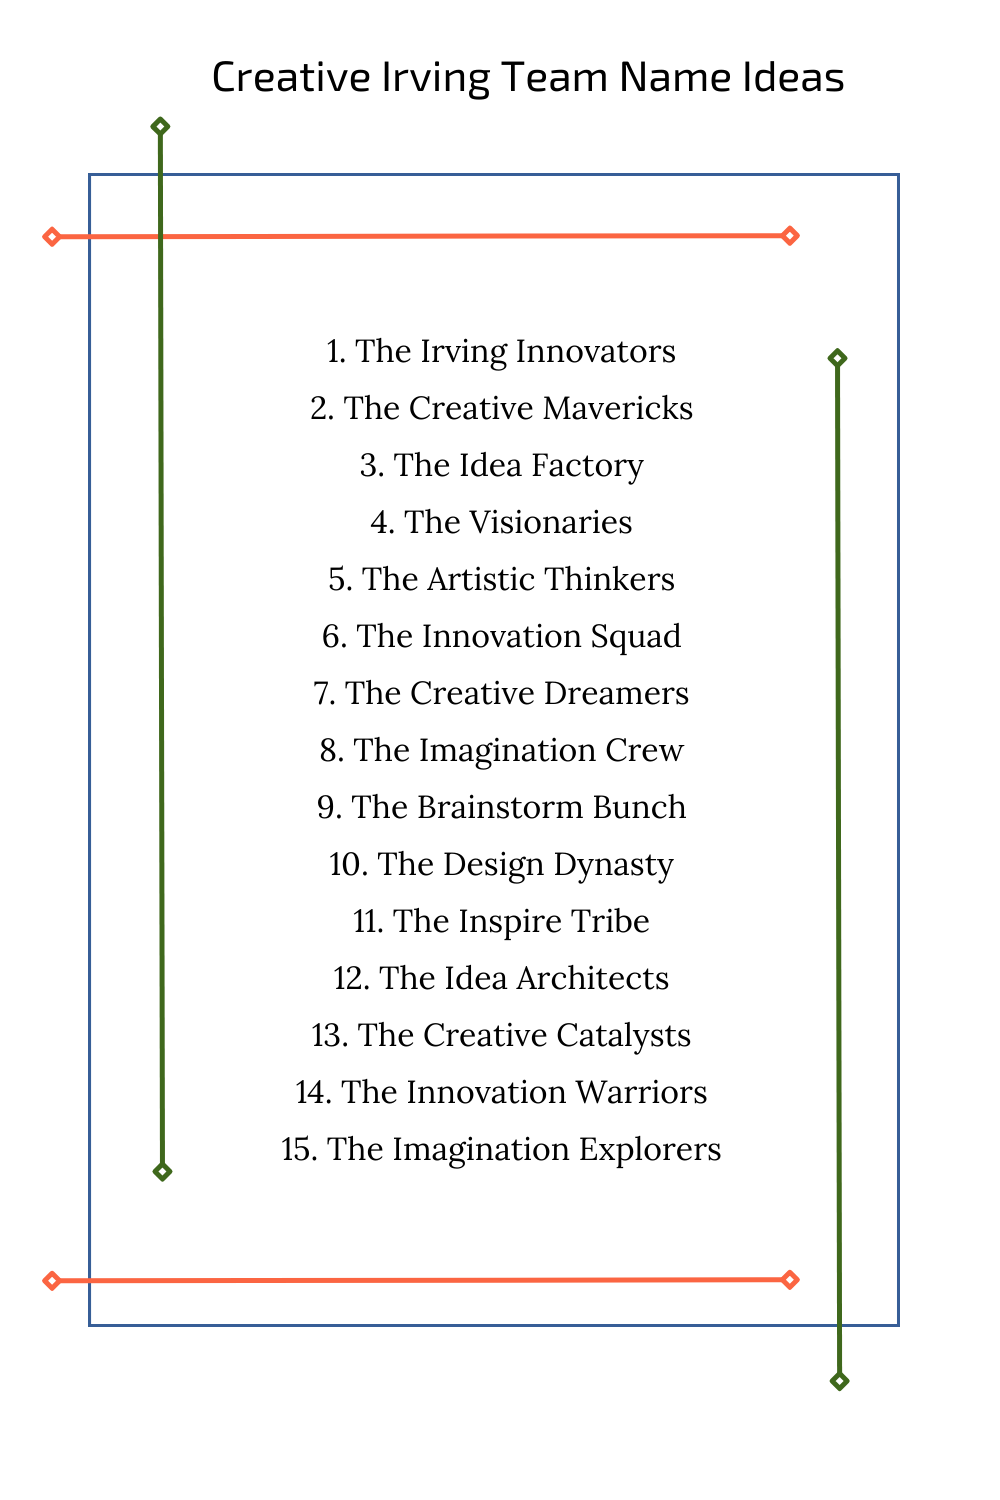 Creative Irving Team Name Ideas